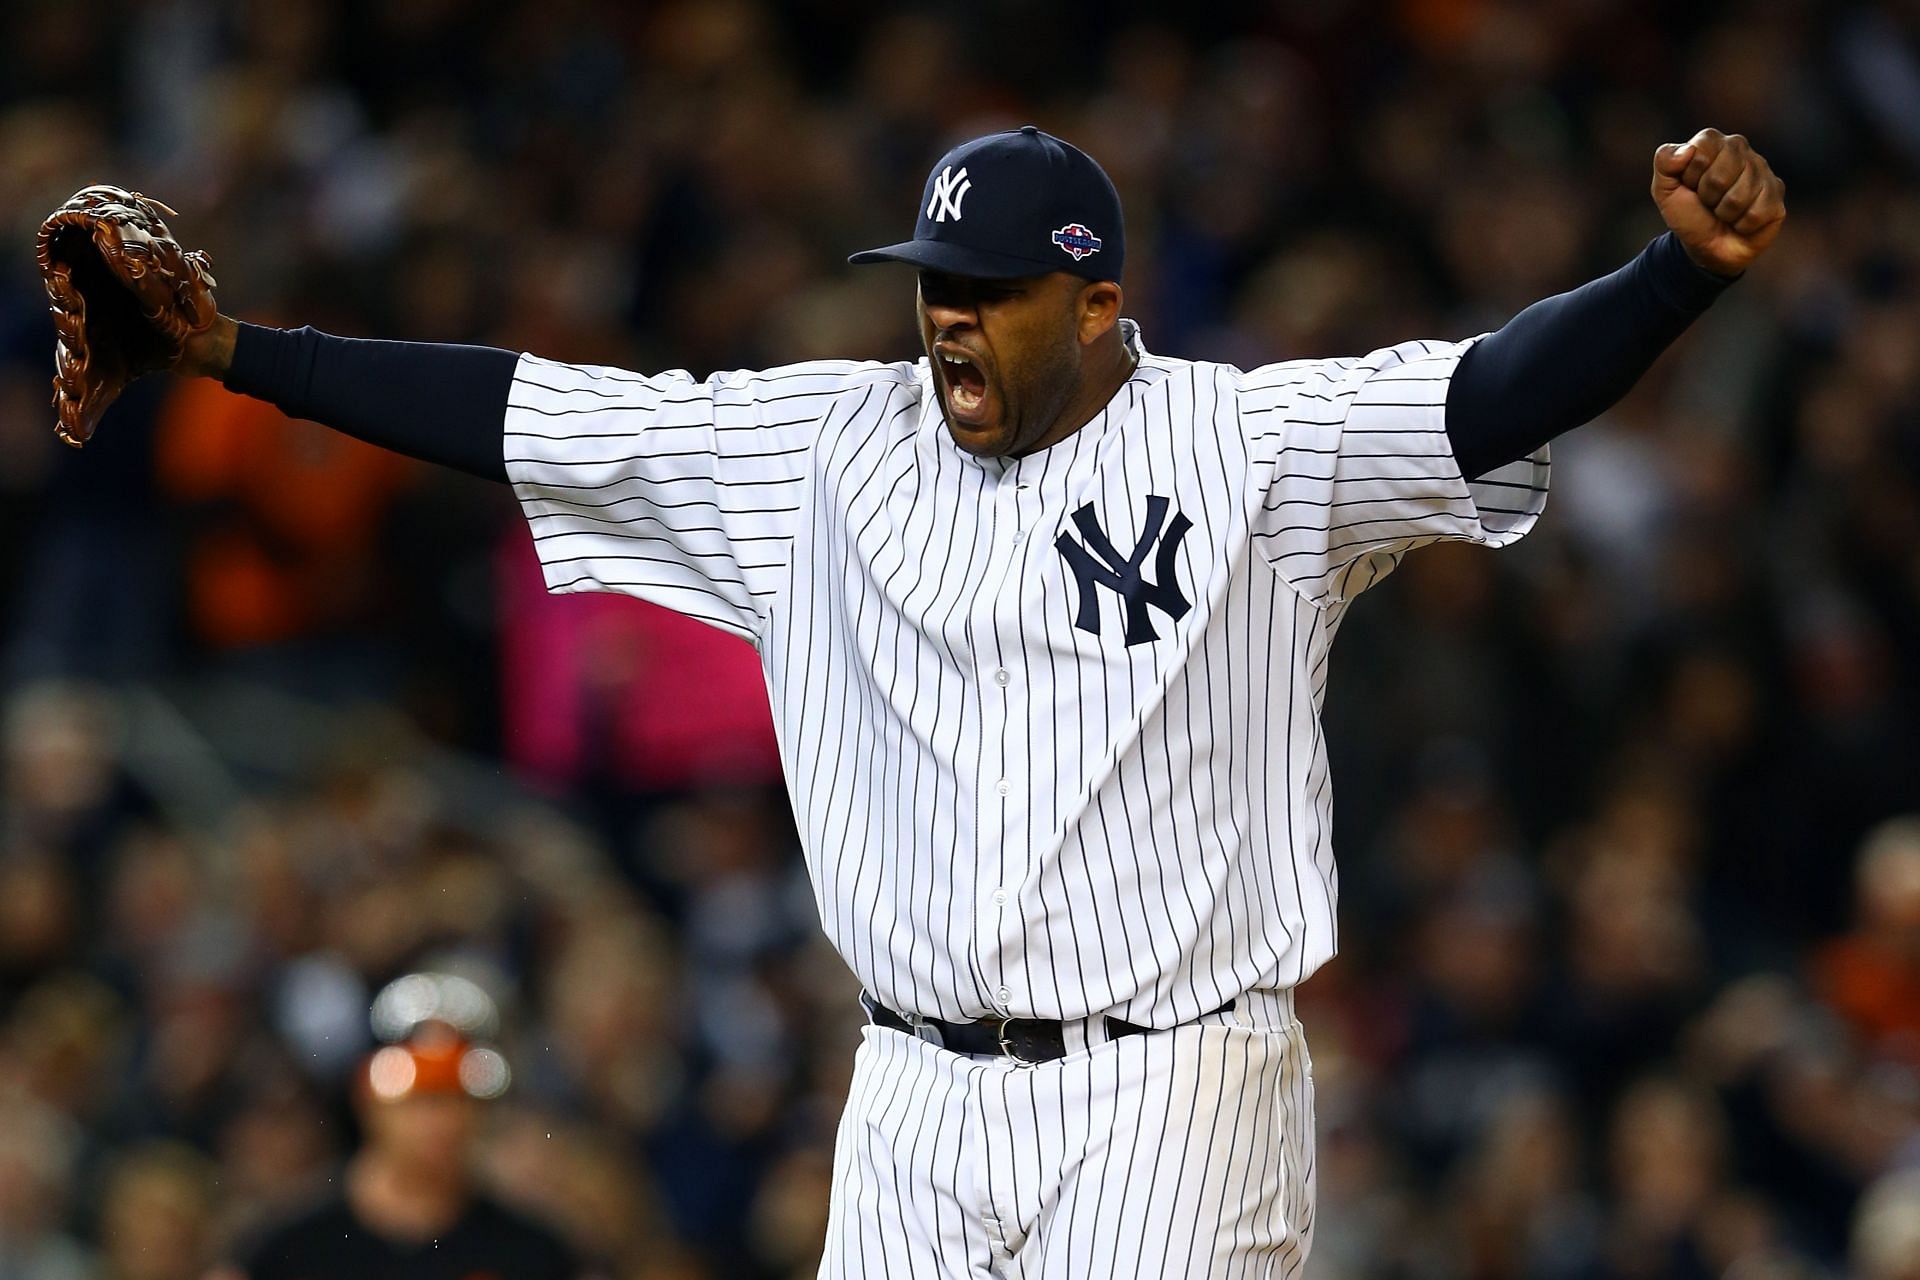 No milestone for CC Sabathia as Yankees' free fall continues